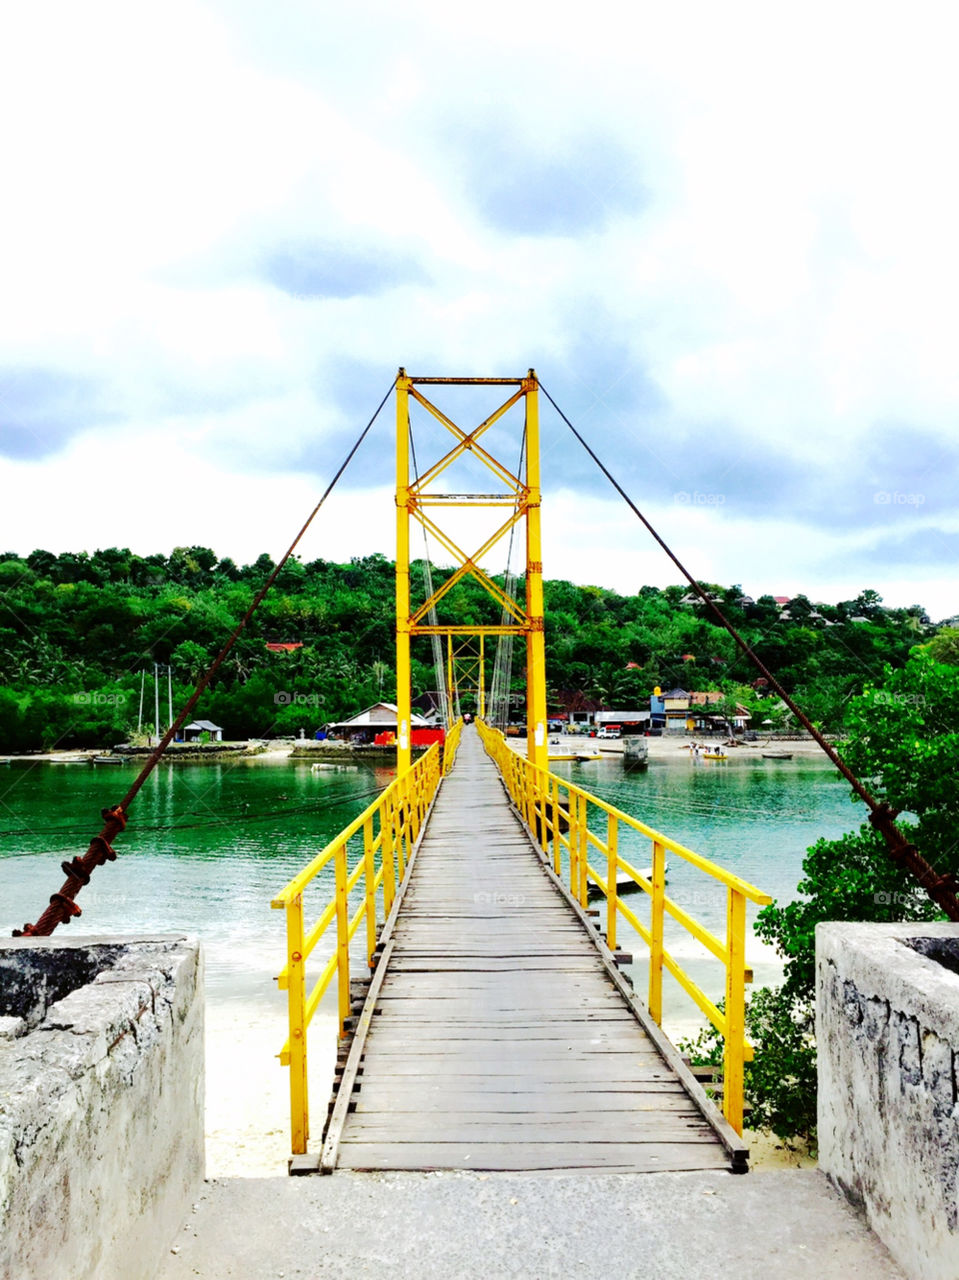 Tropical Island bridge. Suspension bridge between two islands, Nusa Lembongan, Indonesia